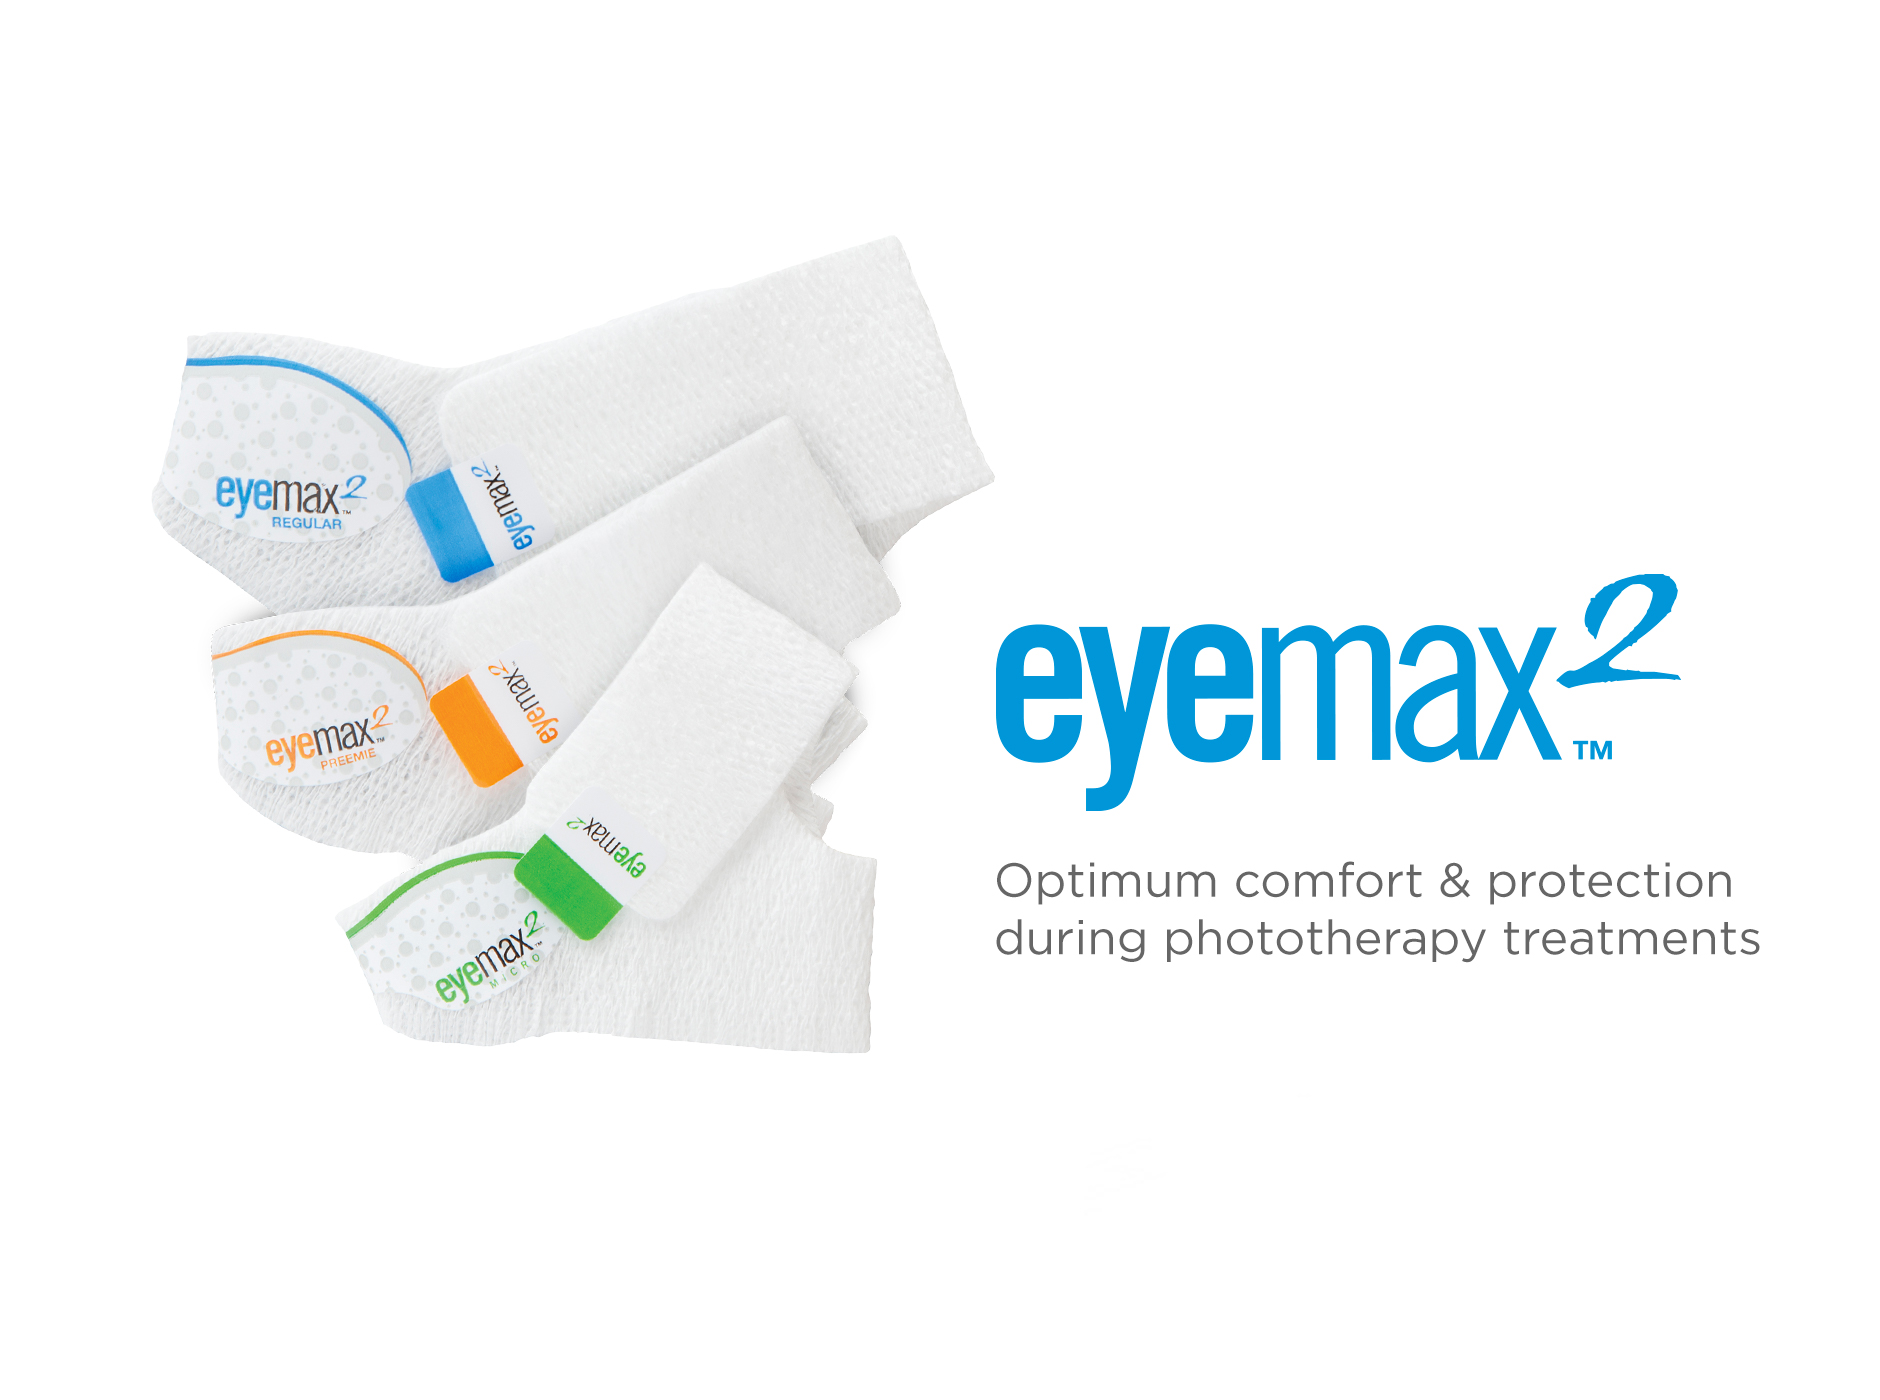 Three Eyemax 2 phototherapy masks